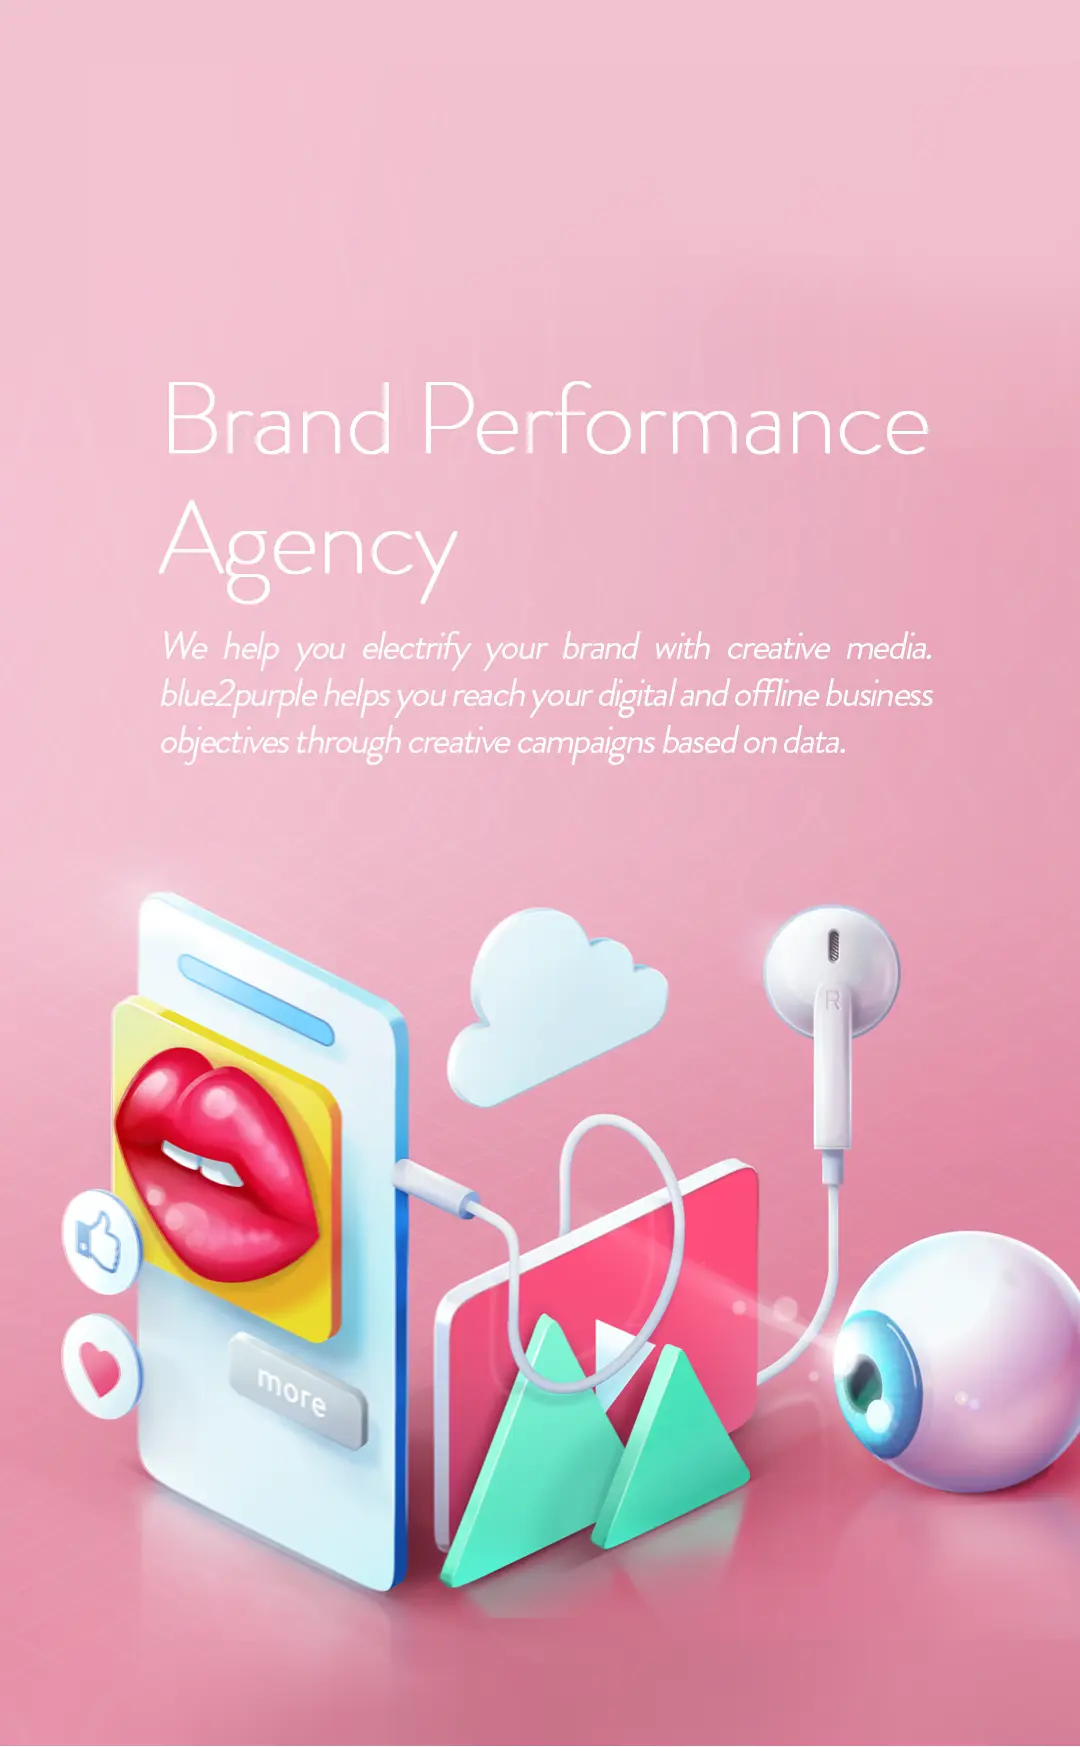 Brand performance agency